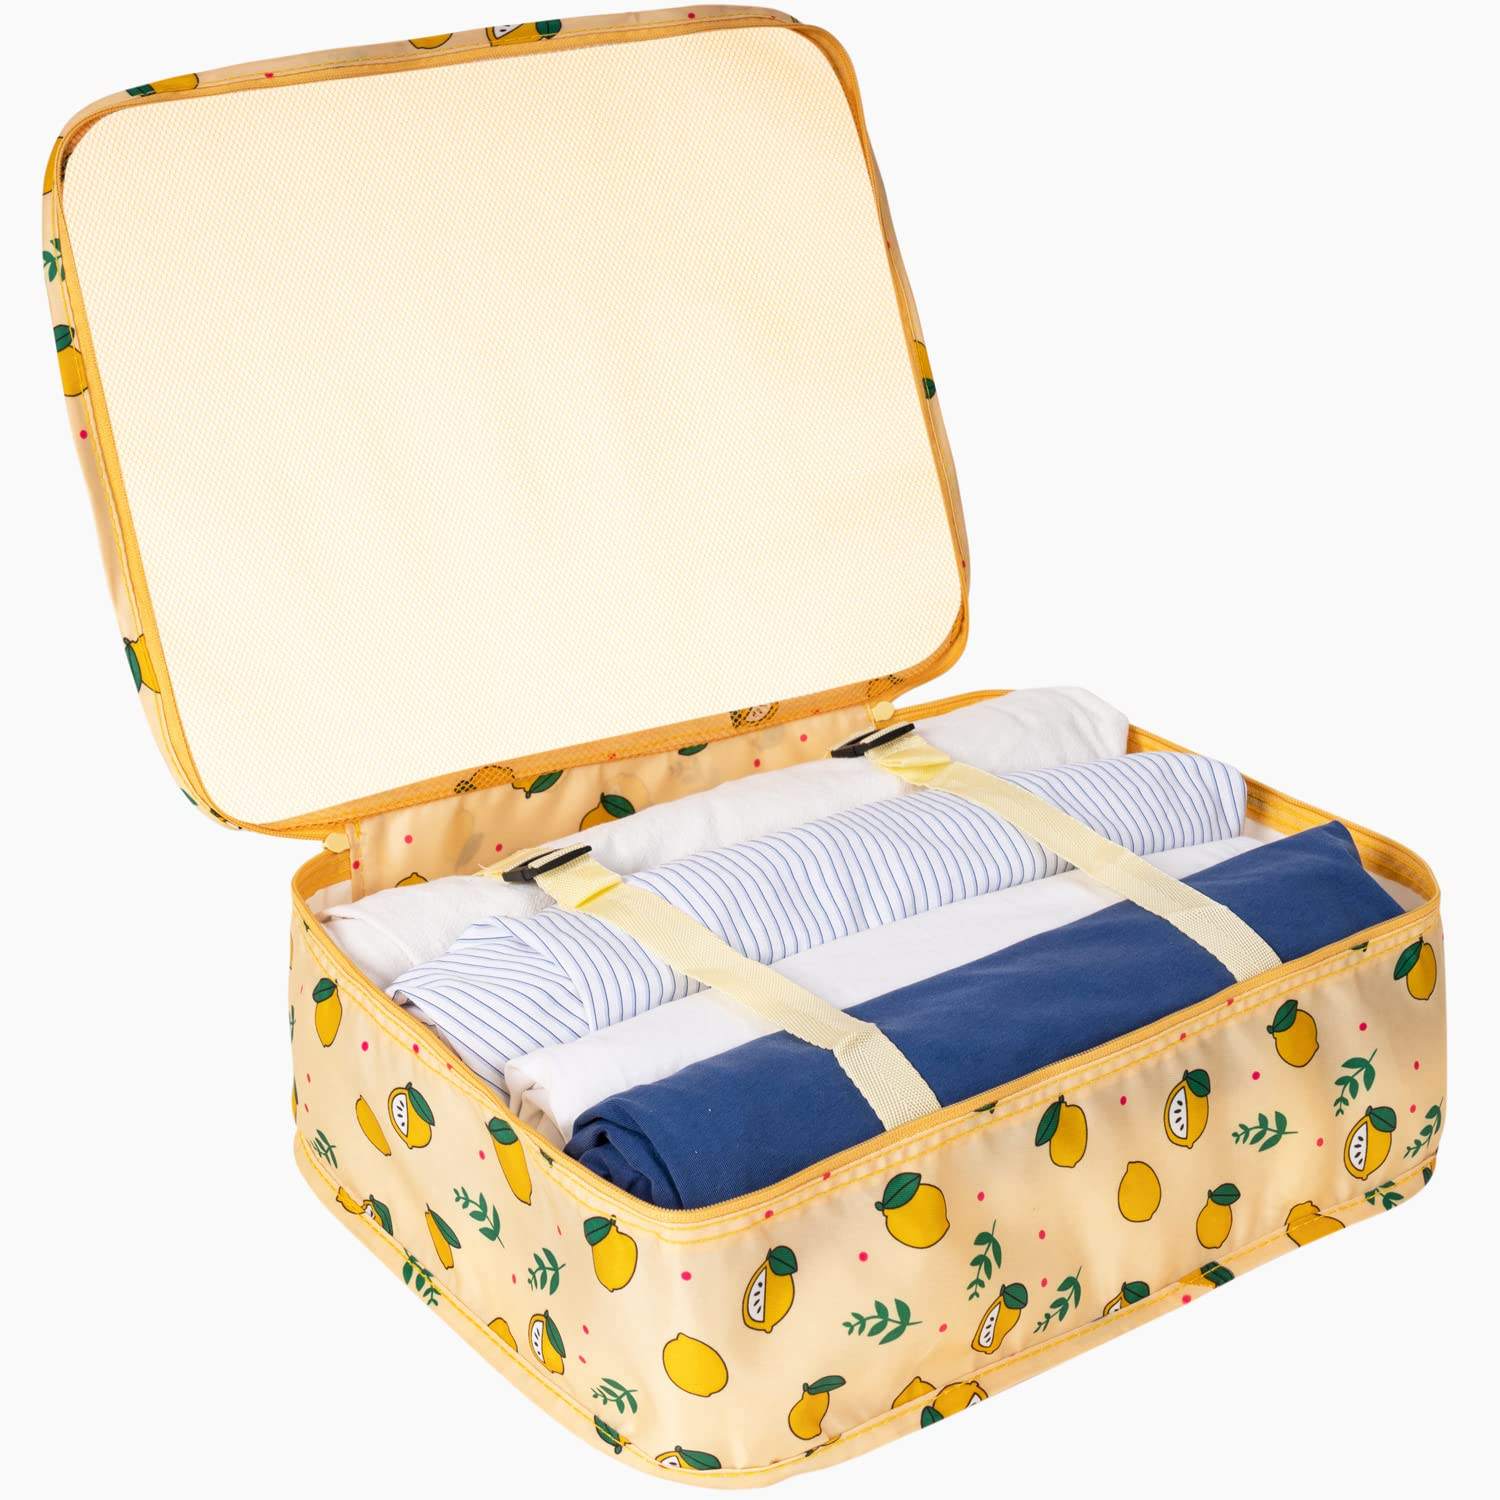 Lightweight waterproof portable 6 pcs set travel bag suitcase organizer packing cube storage for trip